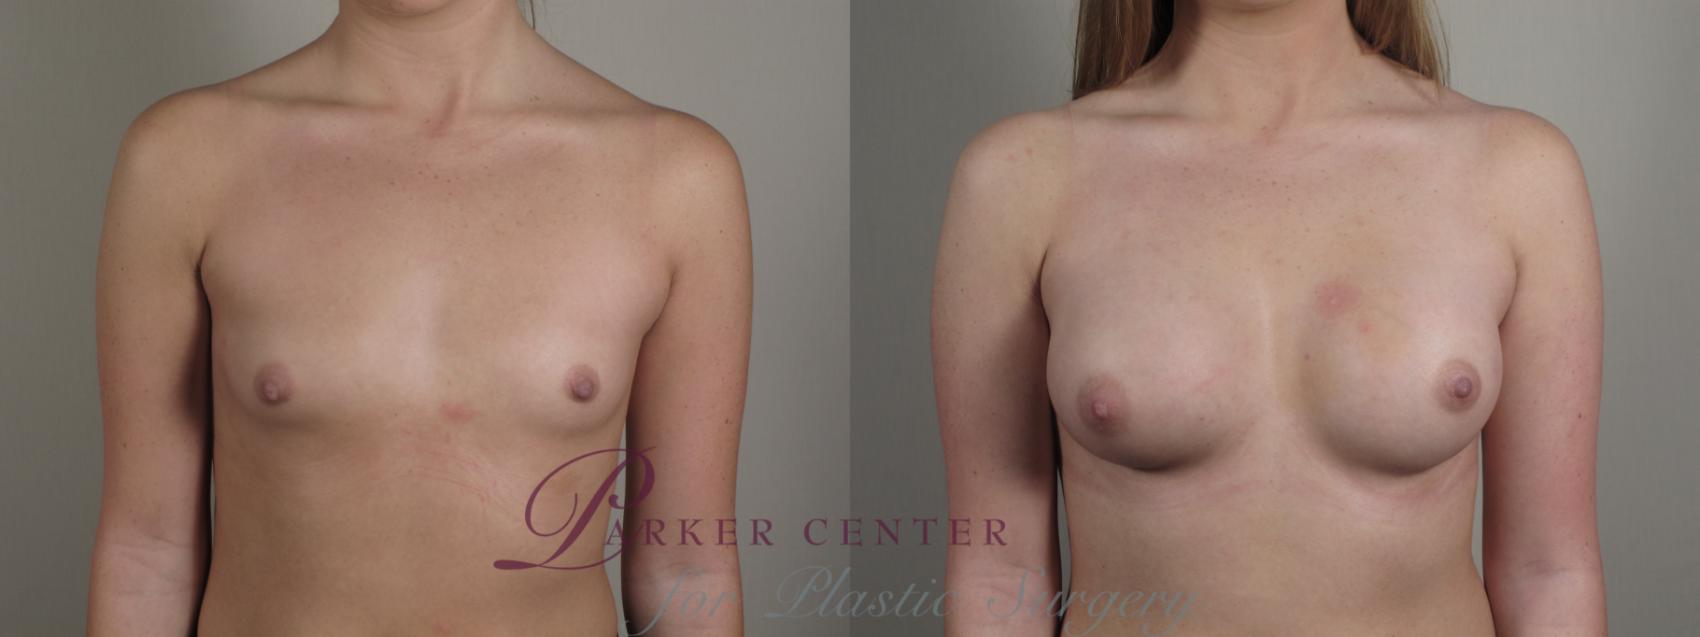 Breast Augmentation Case 998 Before & After Front | Paramus, NJ | Parker Center for Plastic Surgery